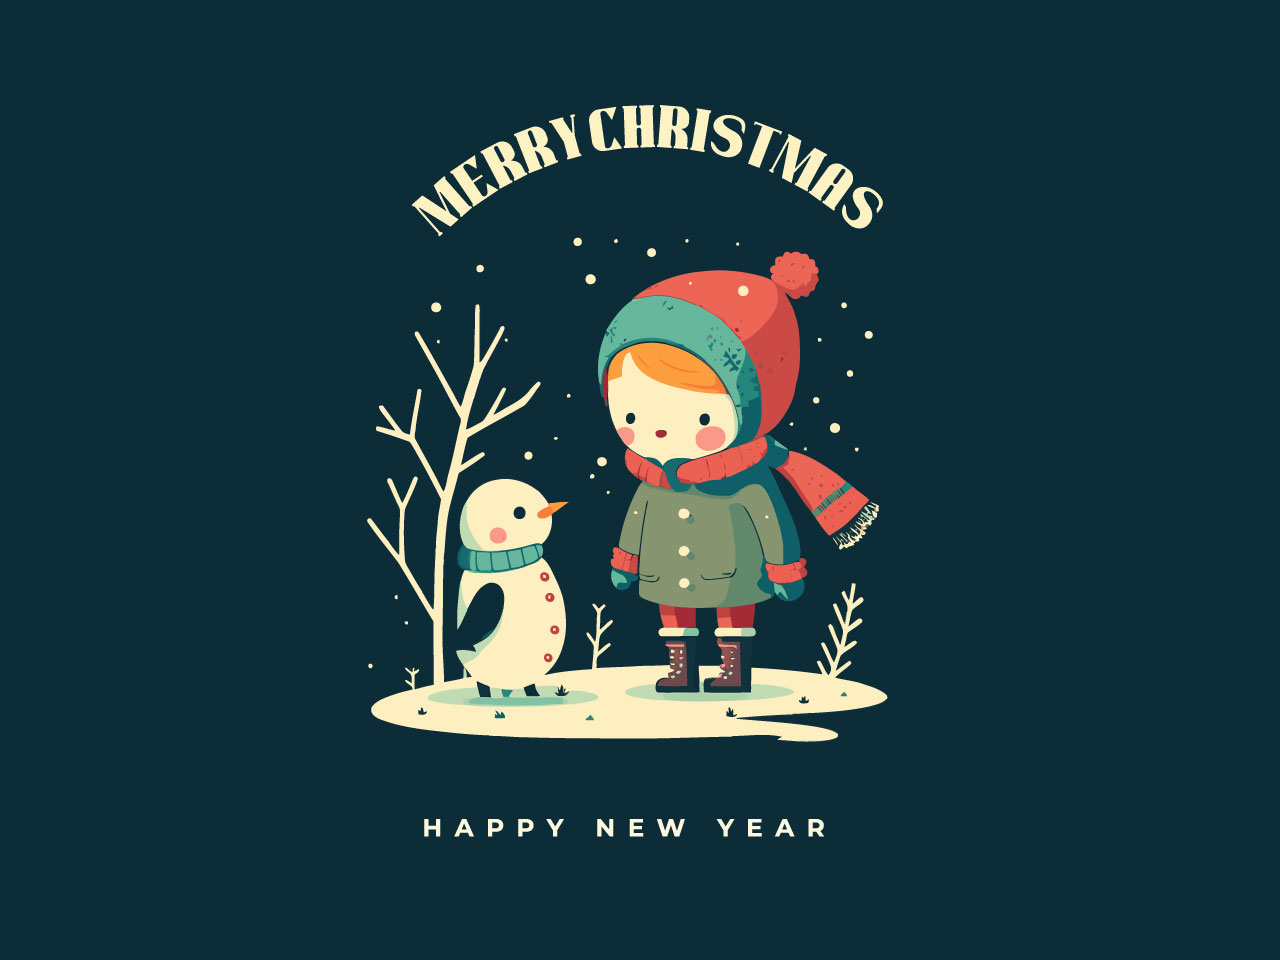 Merry christmas happy new year greetings cartoon clipart